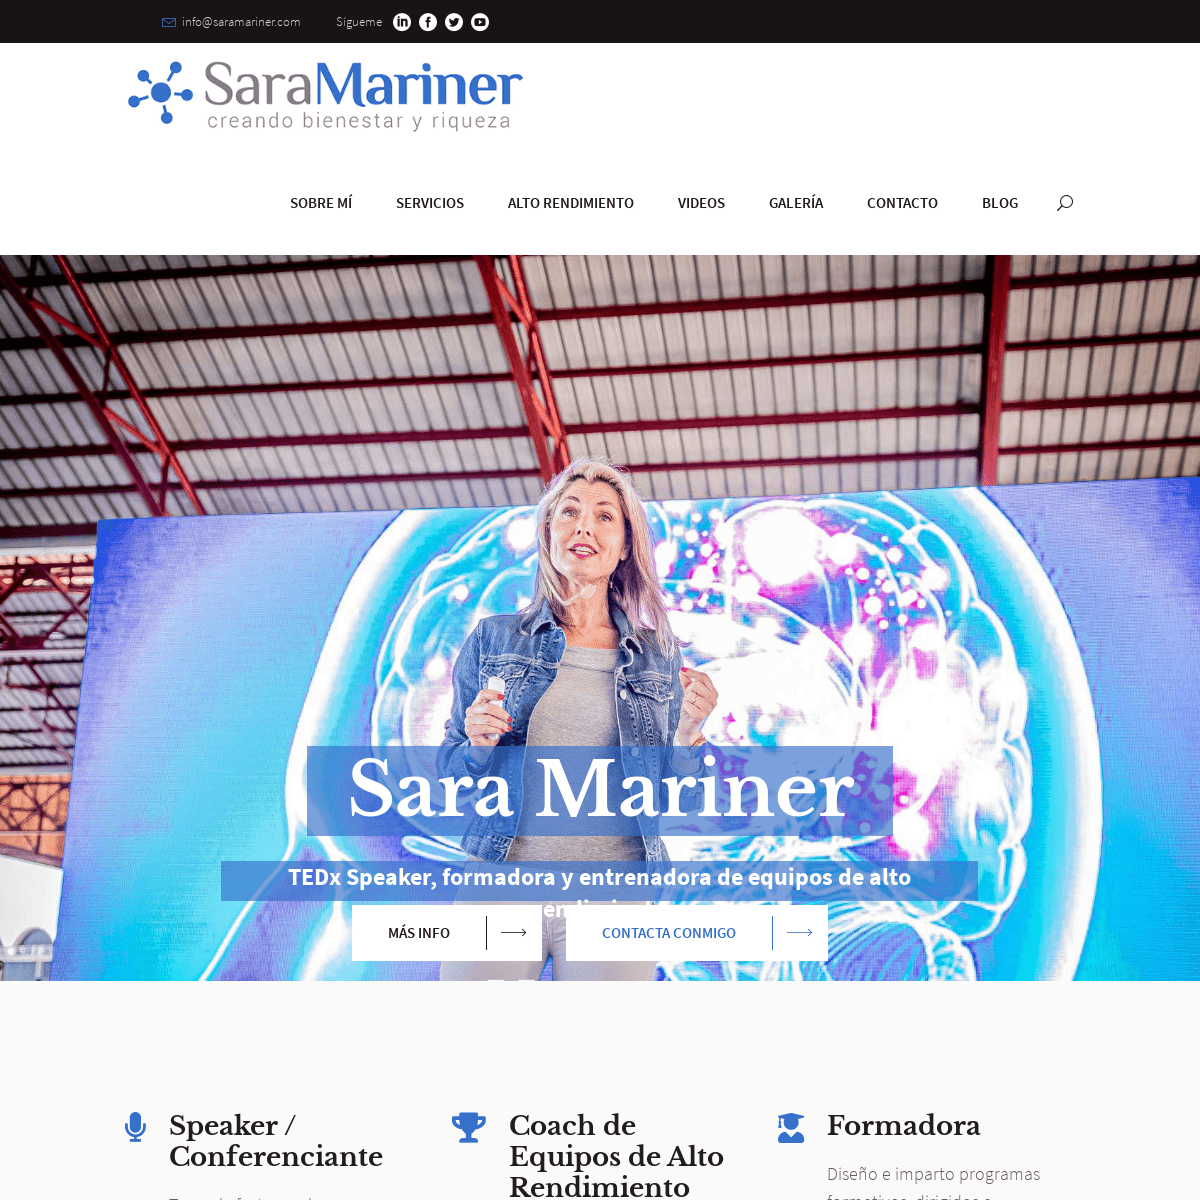 A complete backup of saramariner.com